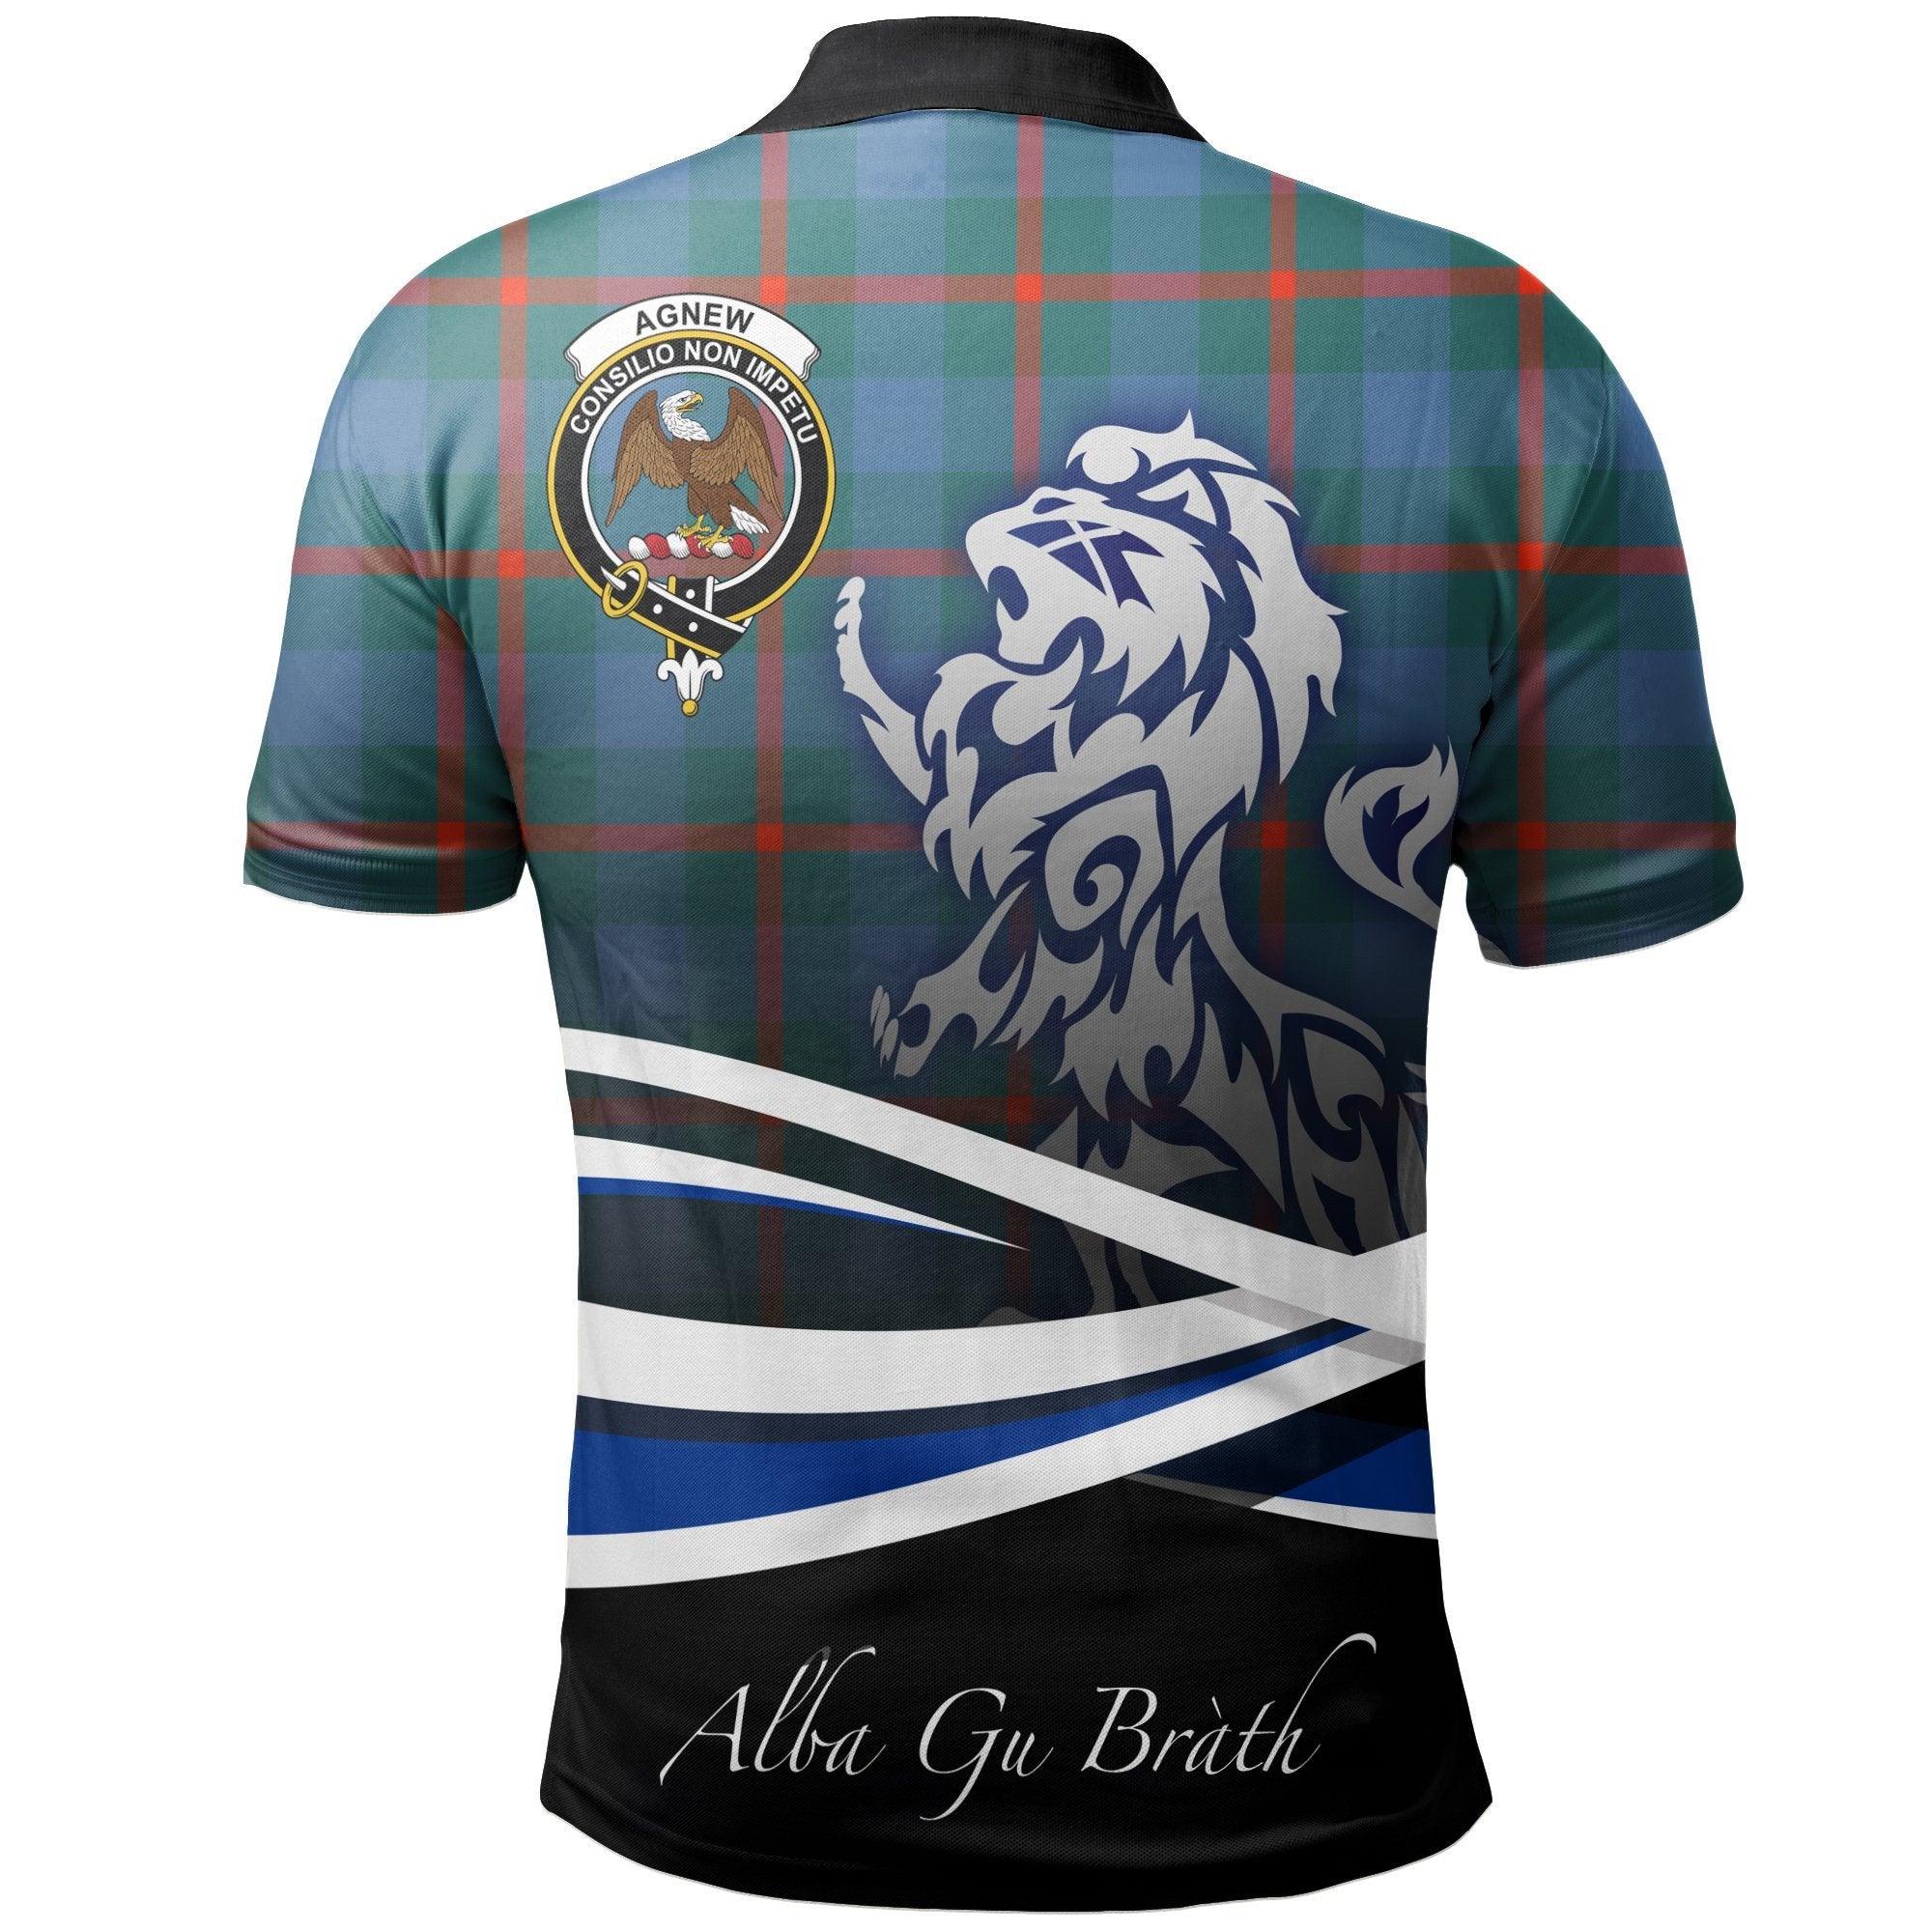 Agnew Ancient Clan Polo Shirt, Scottish Tartan Agnew Ancient Clans Polo Shirt Crest Lion Style